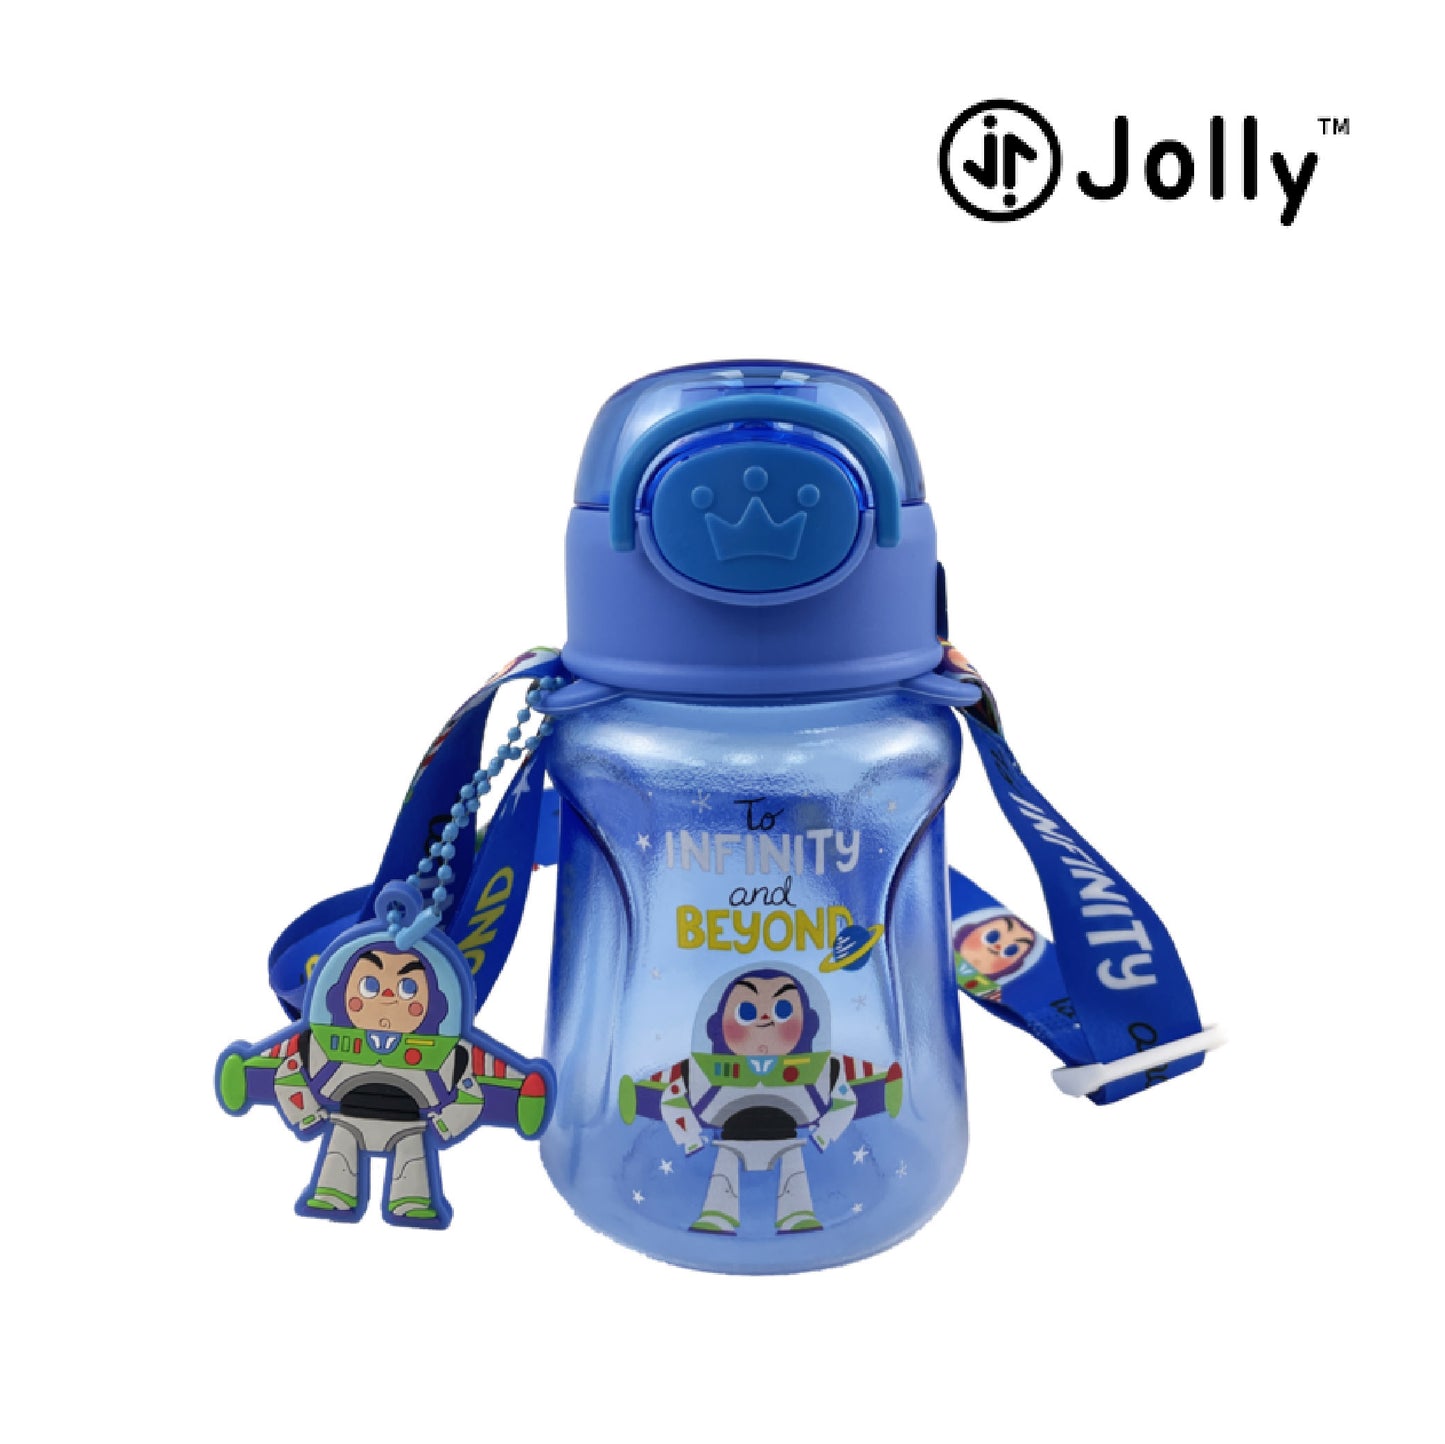 【Jolly UK】トイ・ストーリーシリーズ サマーウォーターボトル 全5色